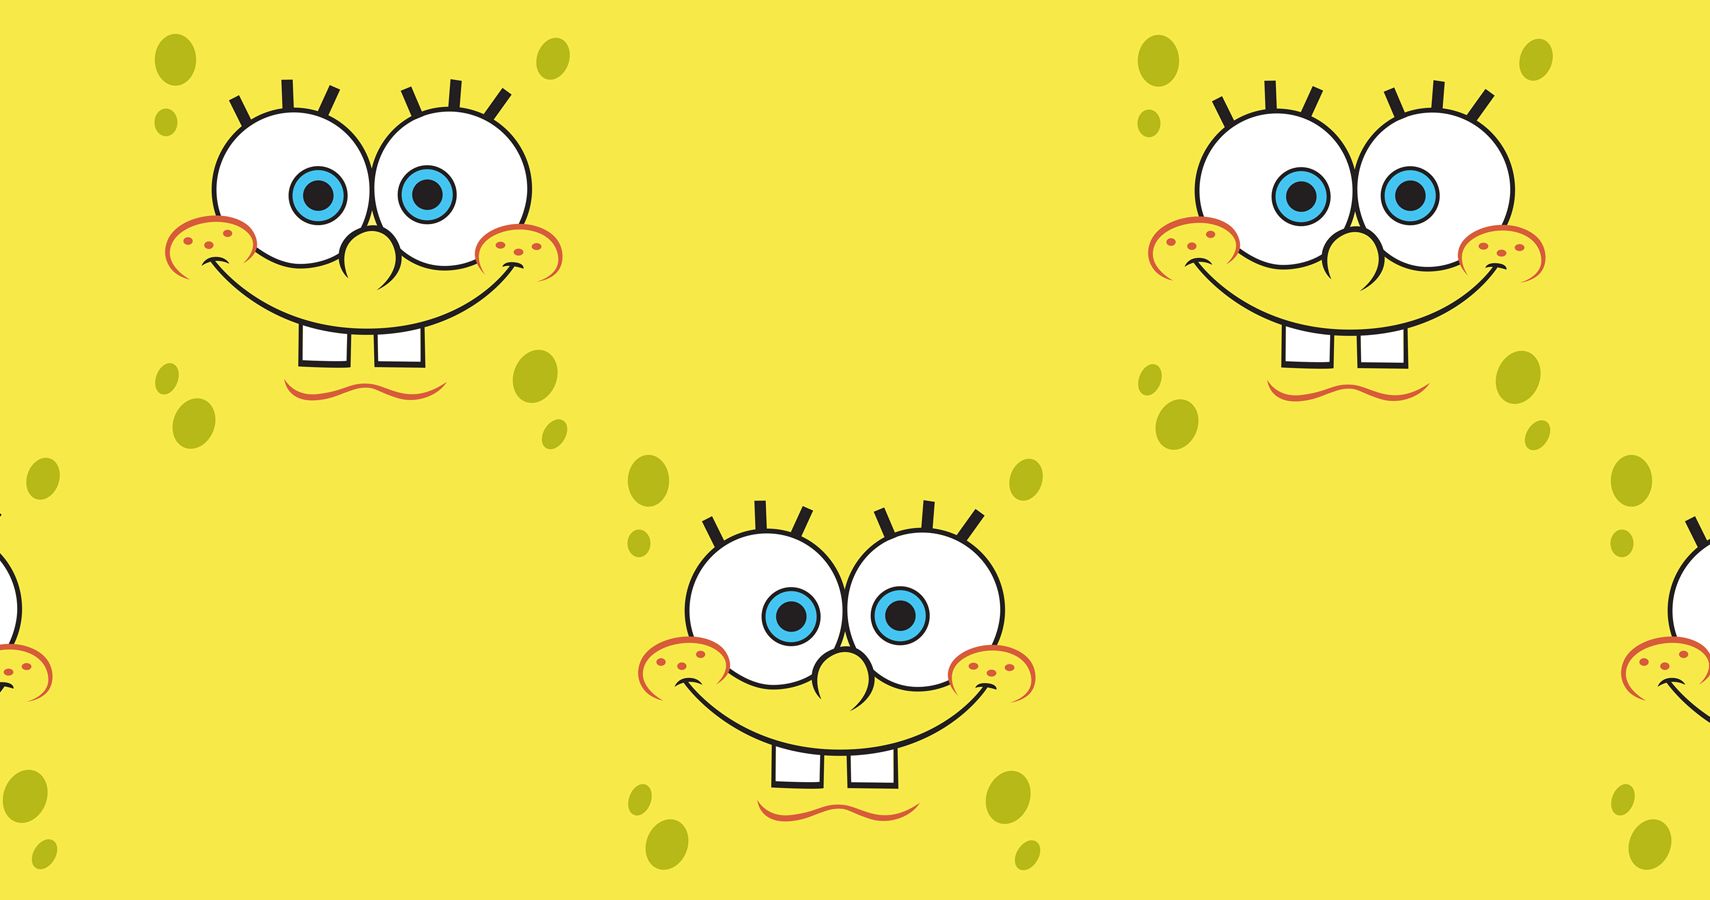 TK Fun Facts About 'Spongebob' All Kids Will Love